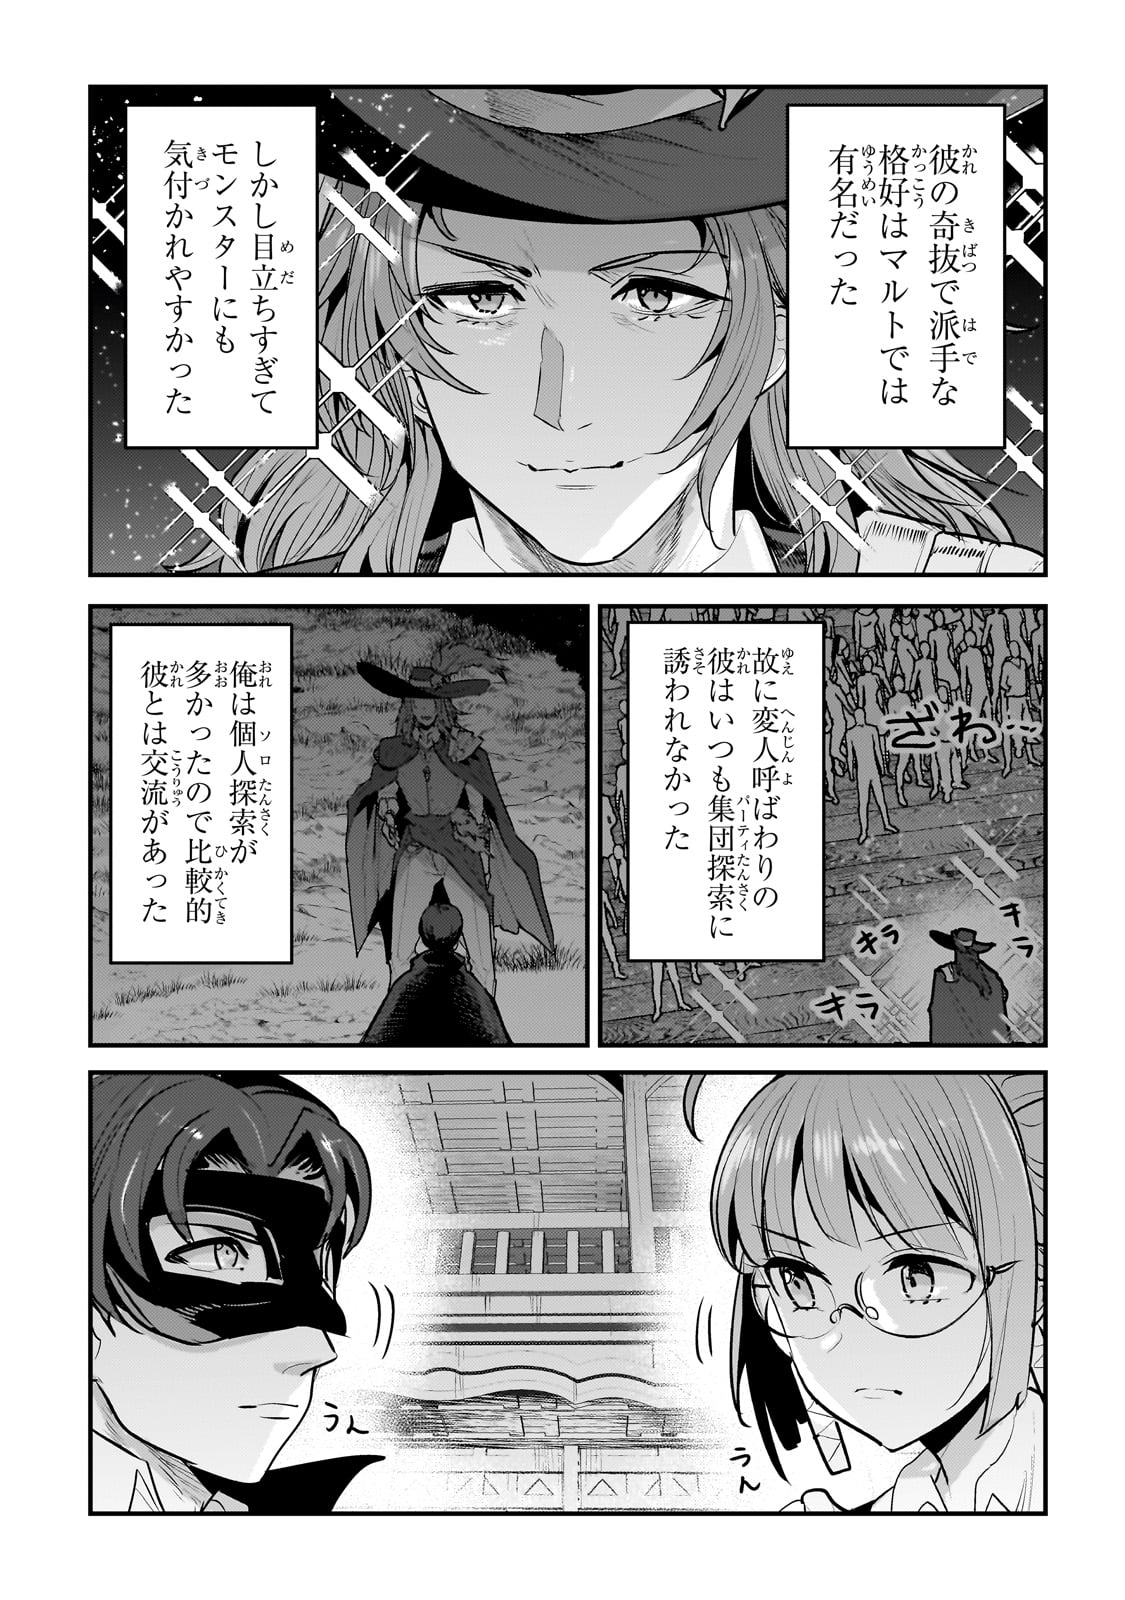 Nozomanu Fushi no Boukensha - Chapter 60 - Page 3